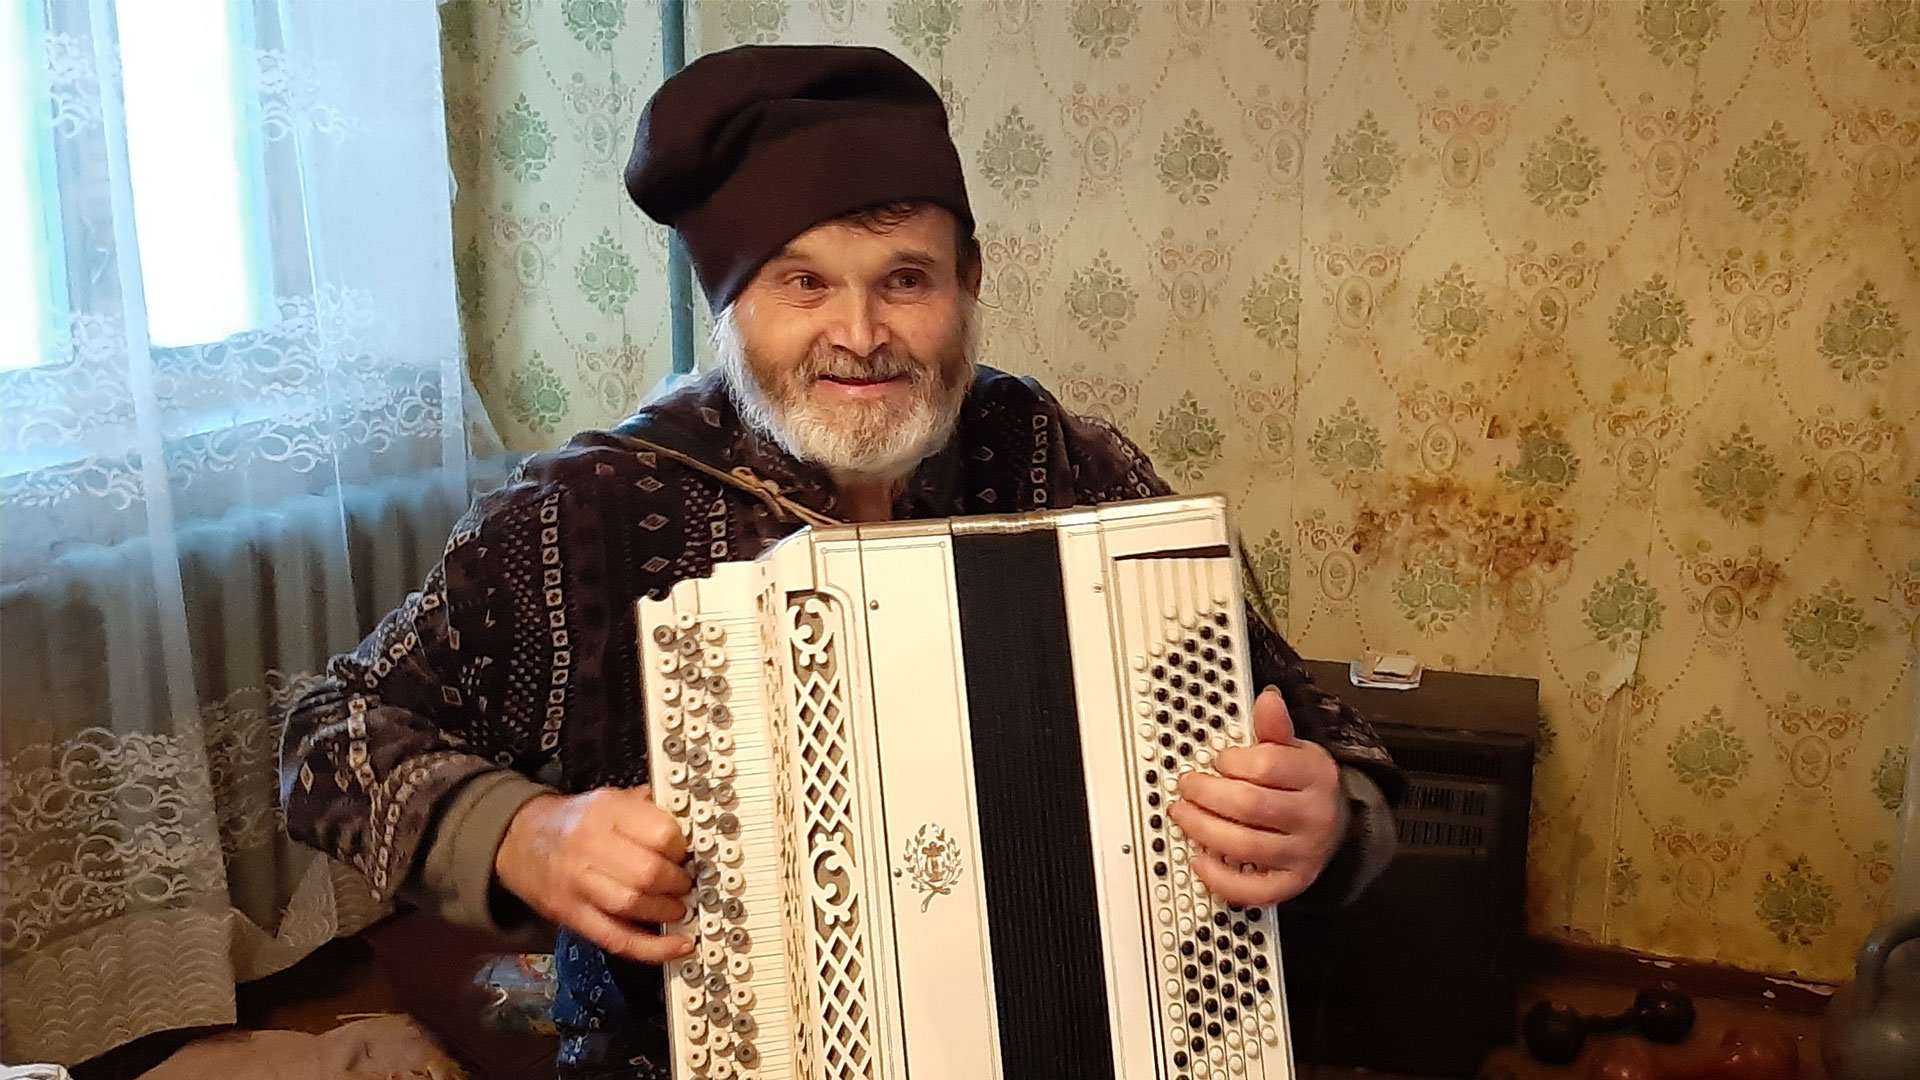 Vladimir - Ukrainian Jew - Holocuast Survivor